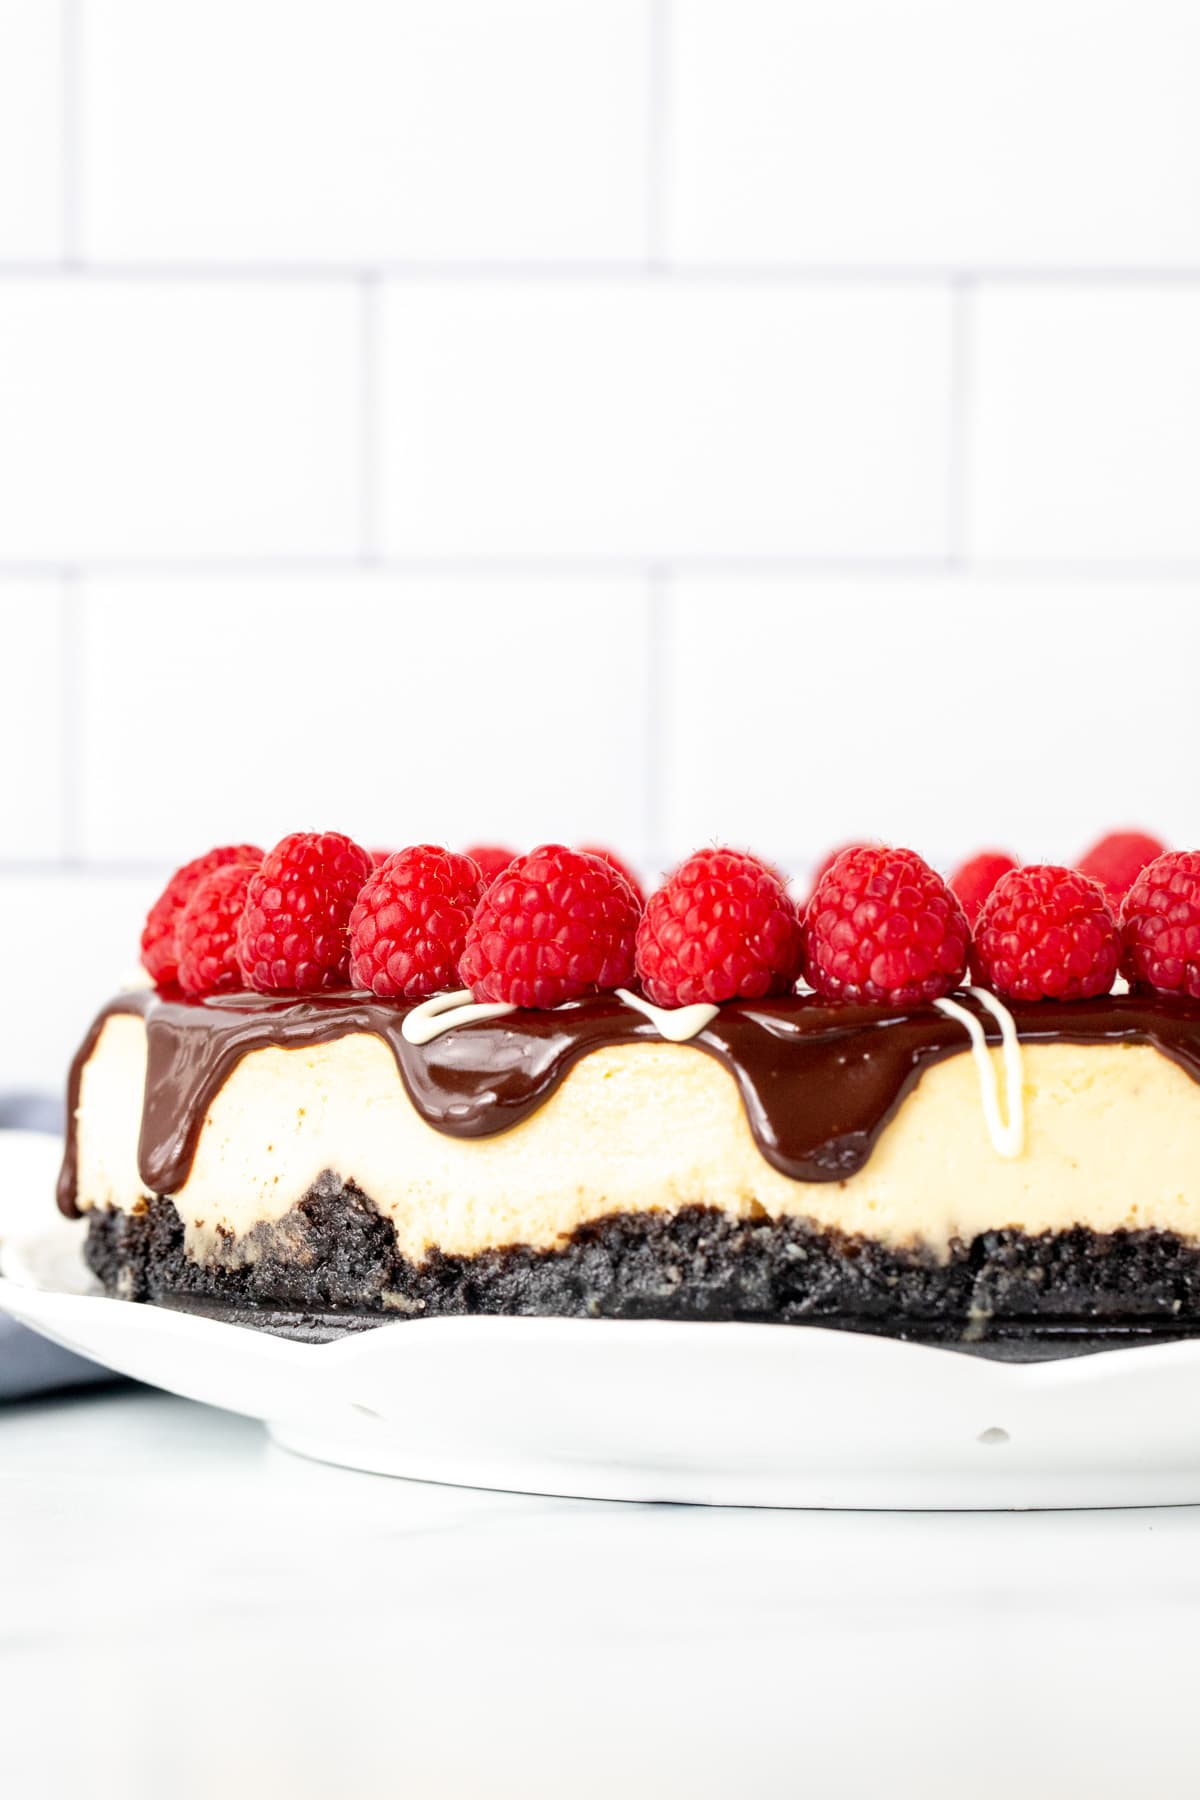 9-inch round white chocolate cheesecake with chocolate topping and raspberries